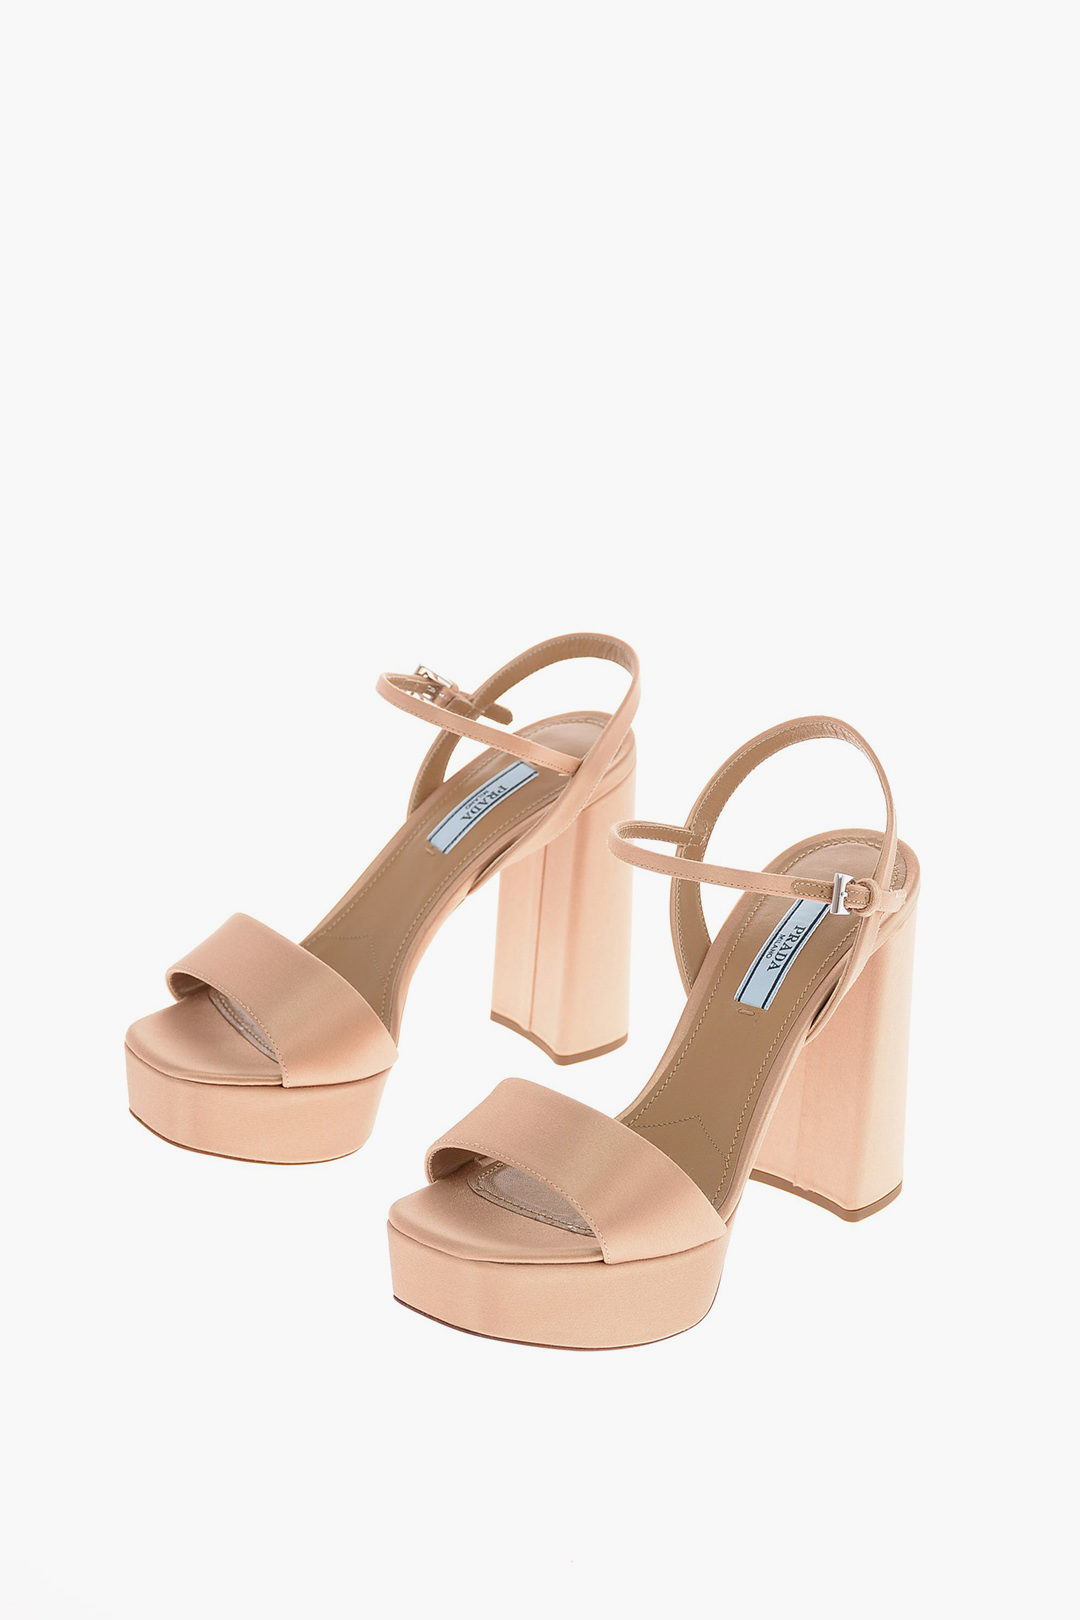 Prada Satin Platform Sandals with Ankle Strap 12 Cm women - Glamood Outlet